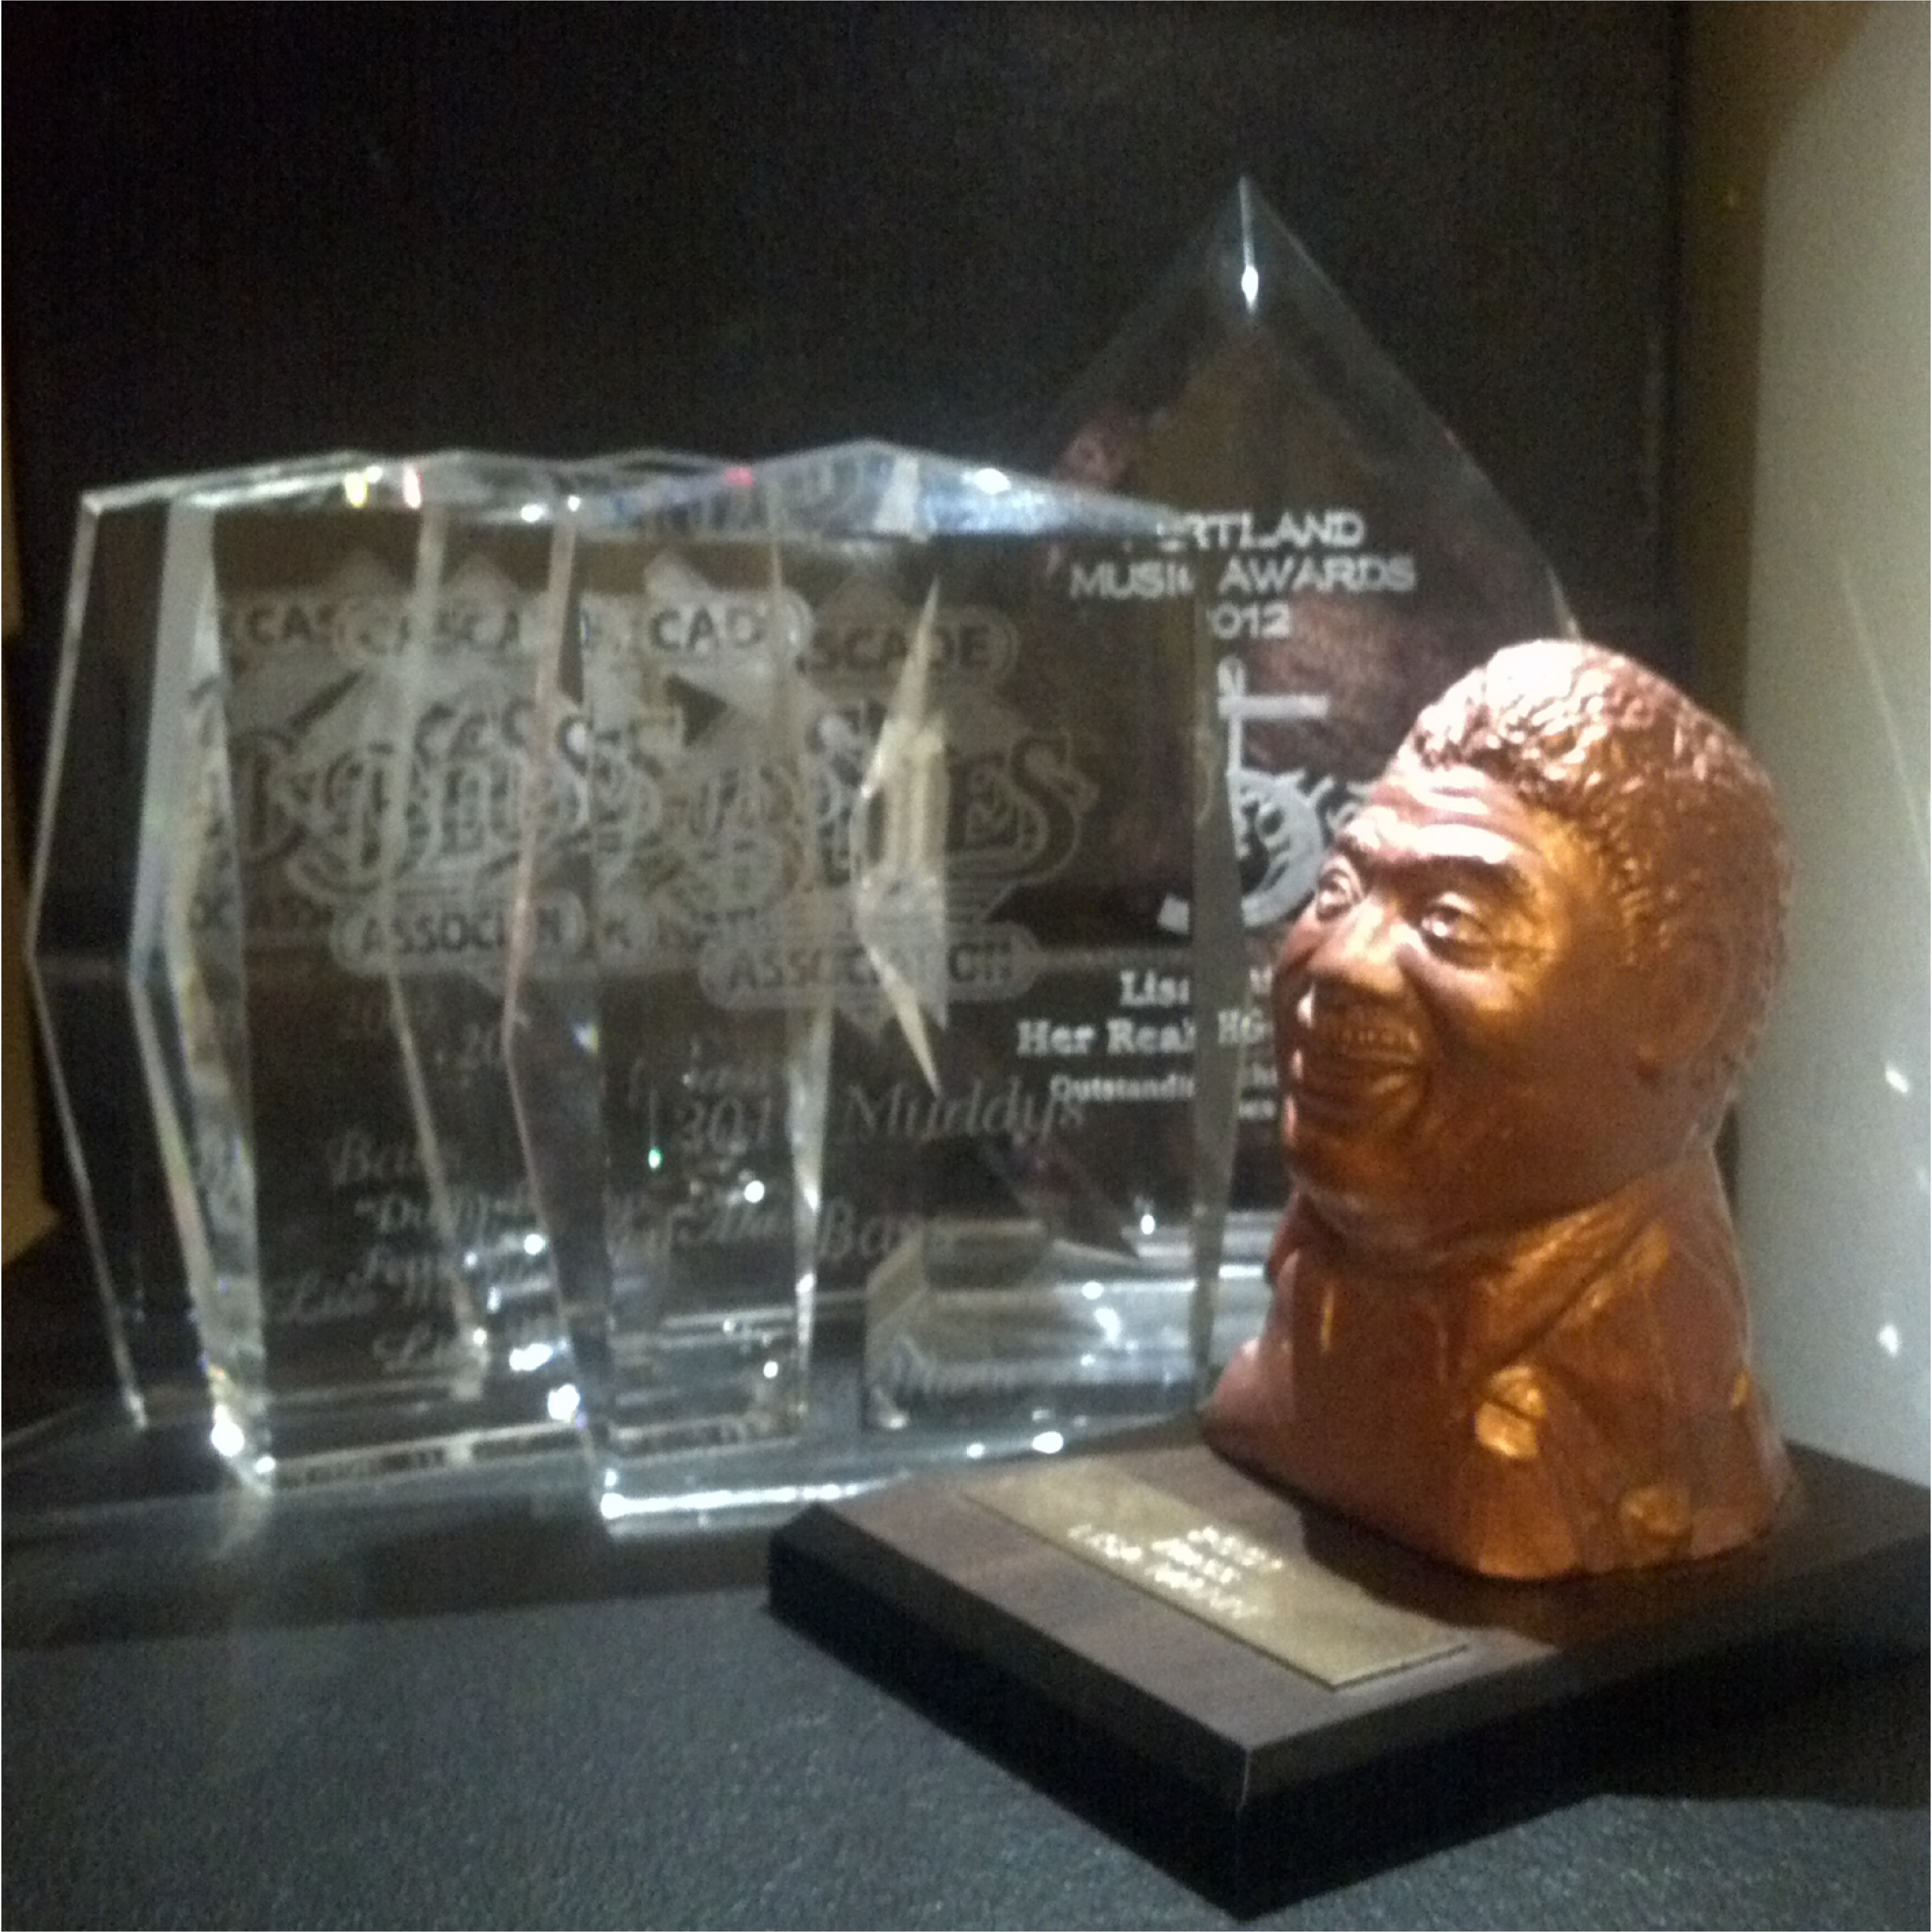 Muddy Waters Awards, Portland Music Award